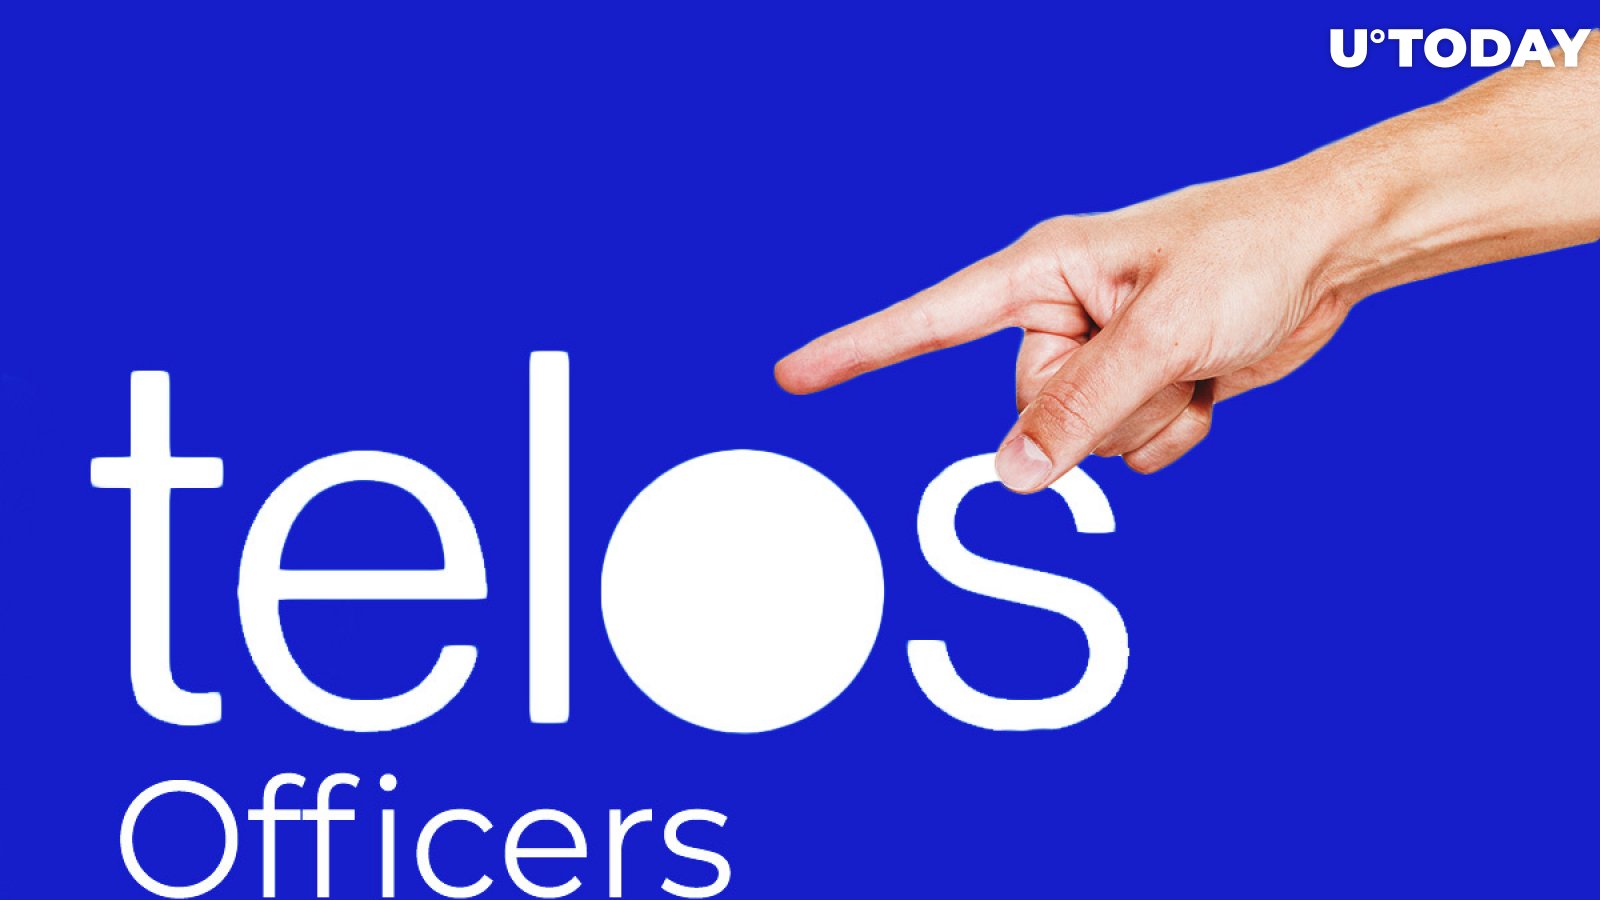 Telos Foundation (TLOS) Officers Punished For Network Security Degradation: Details